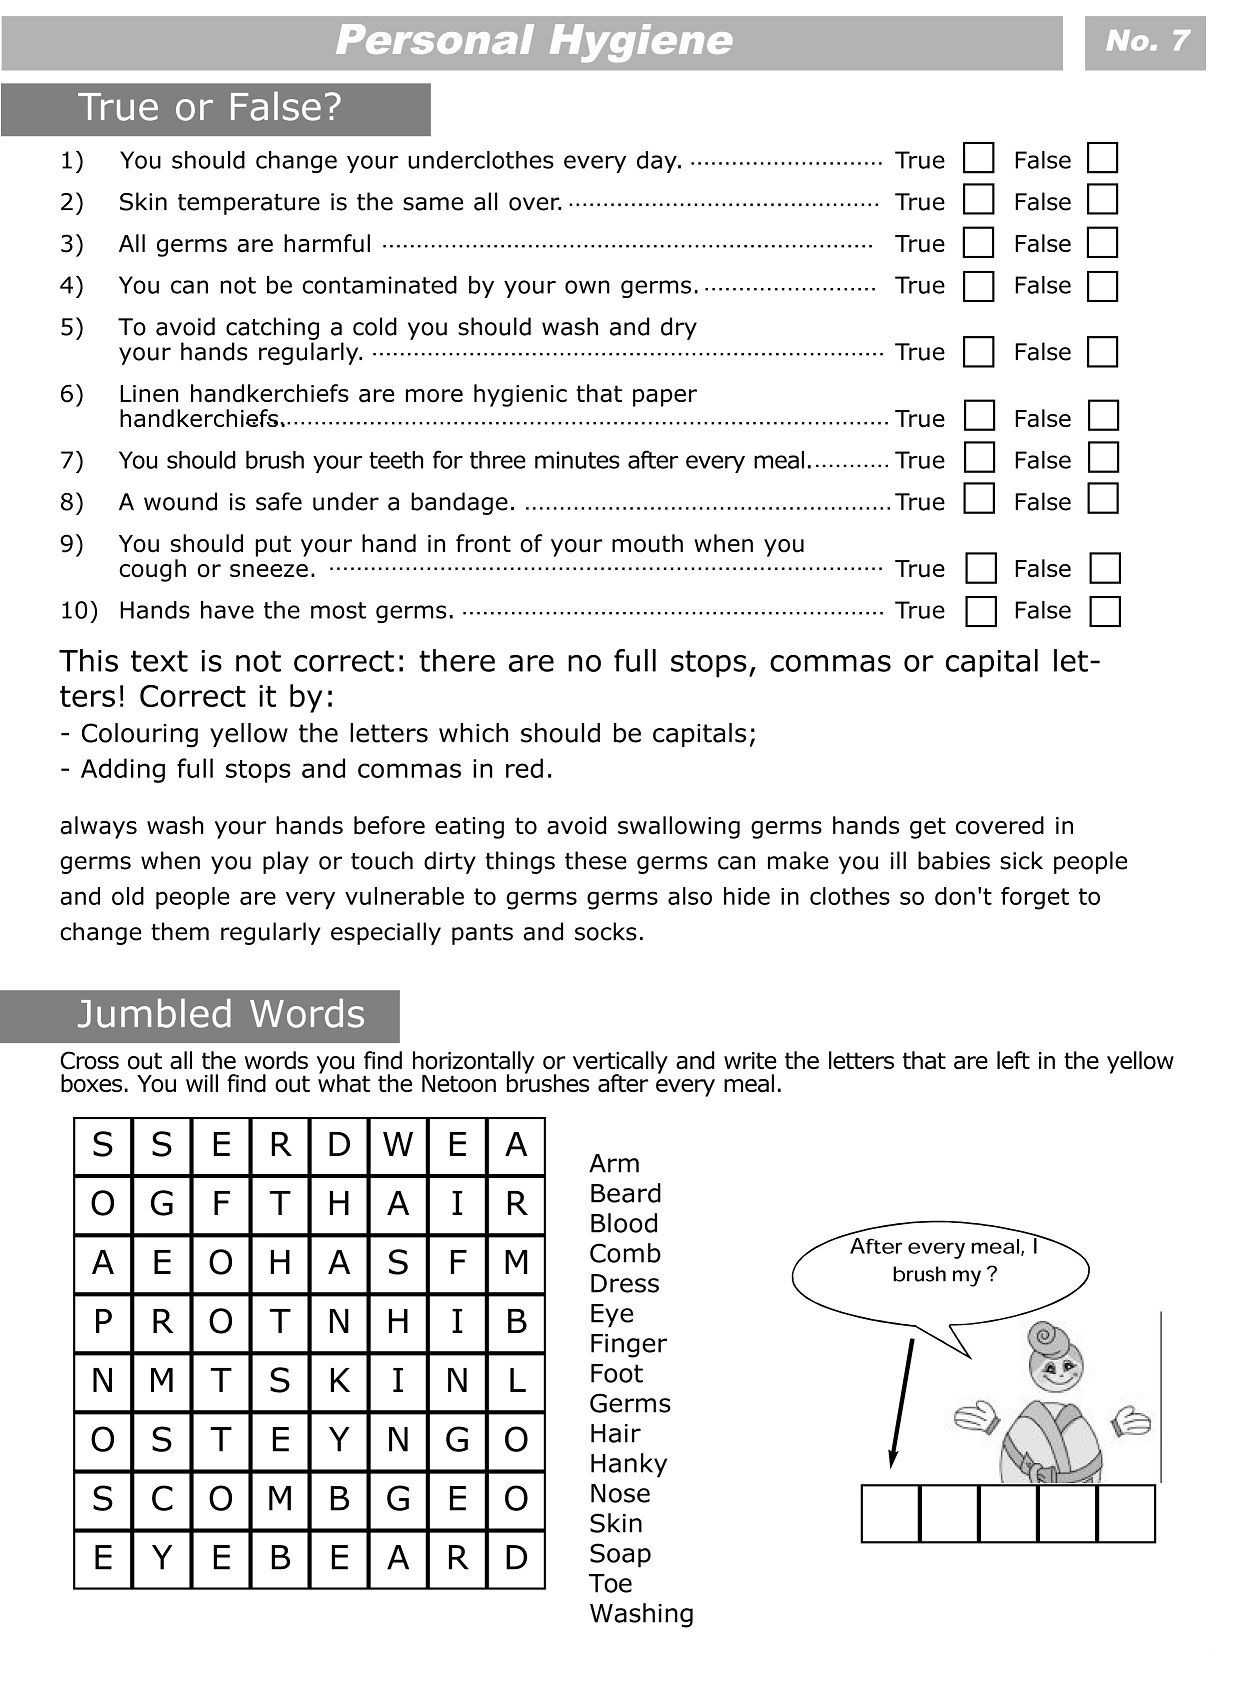 Sleep Hygiene Worksheet Along with Reading Schedule Worksheet Fresh Printable Worksheets for Personal